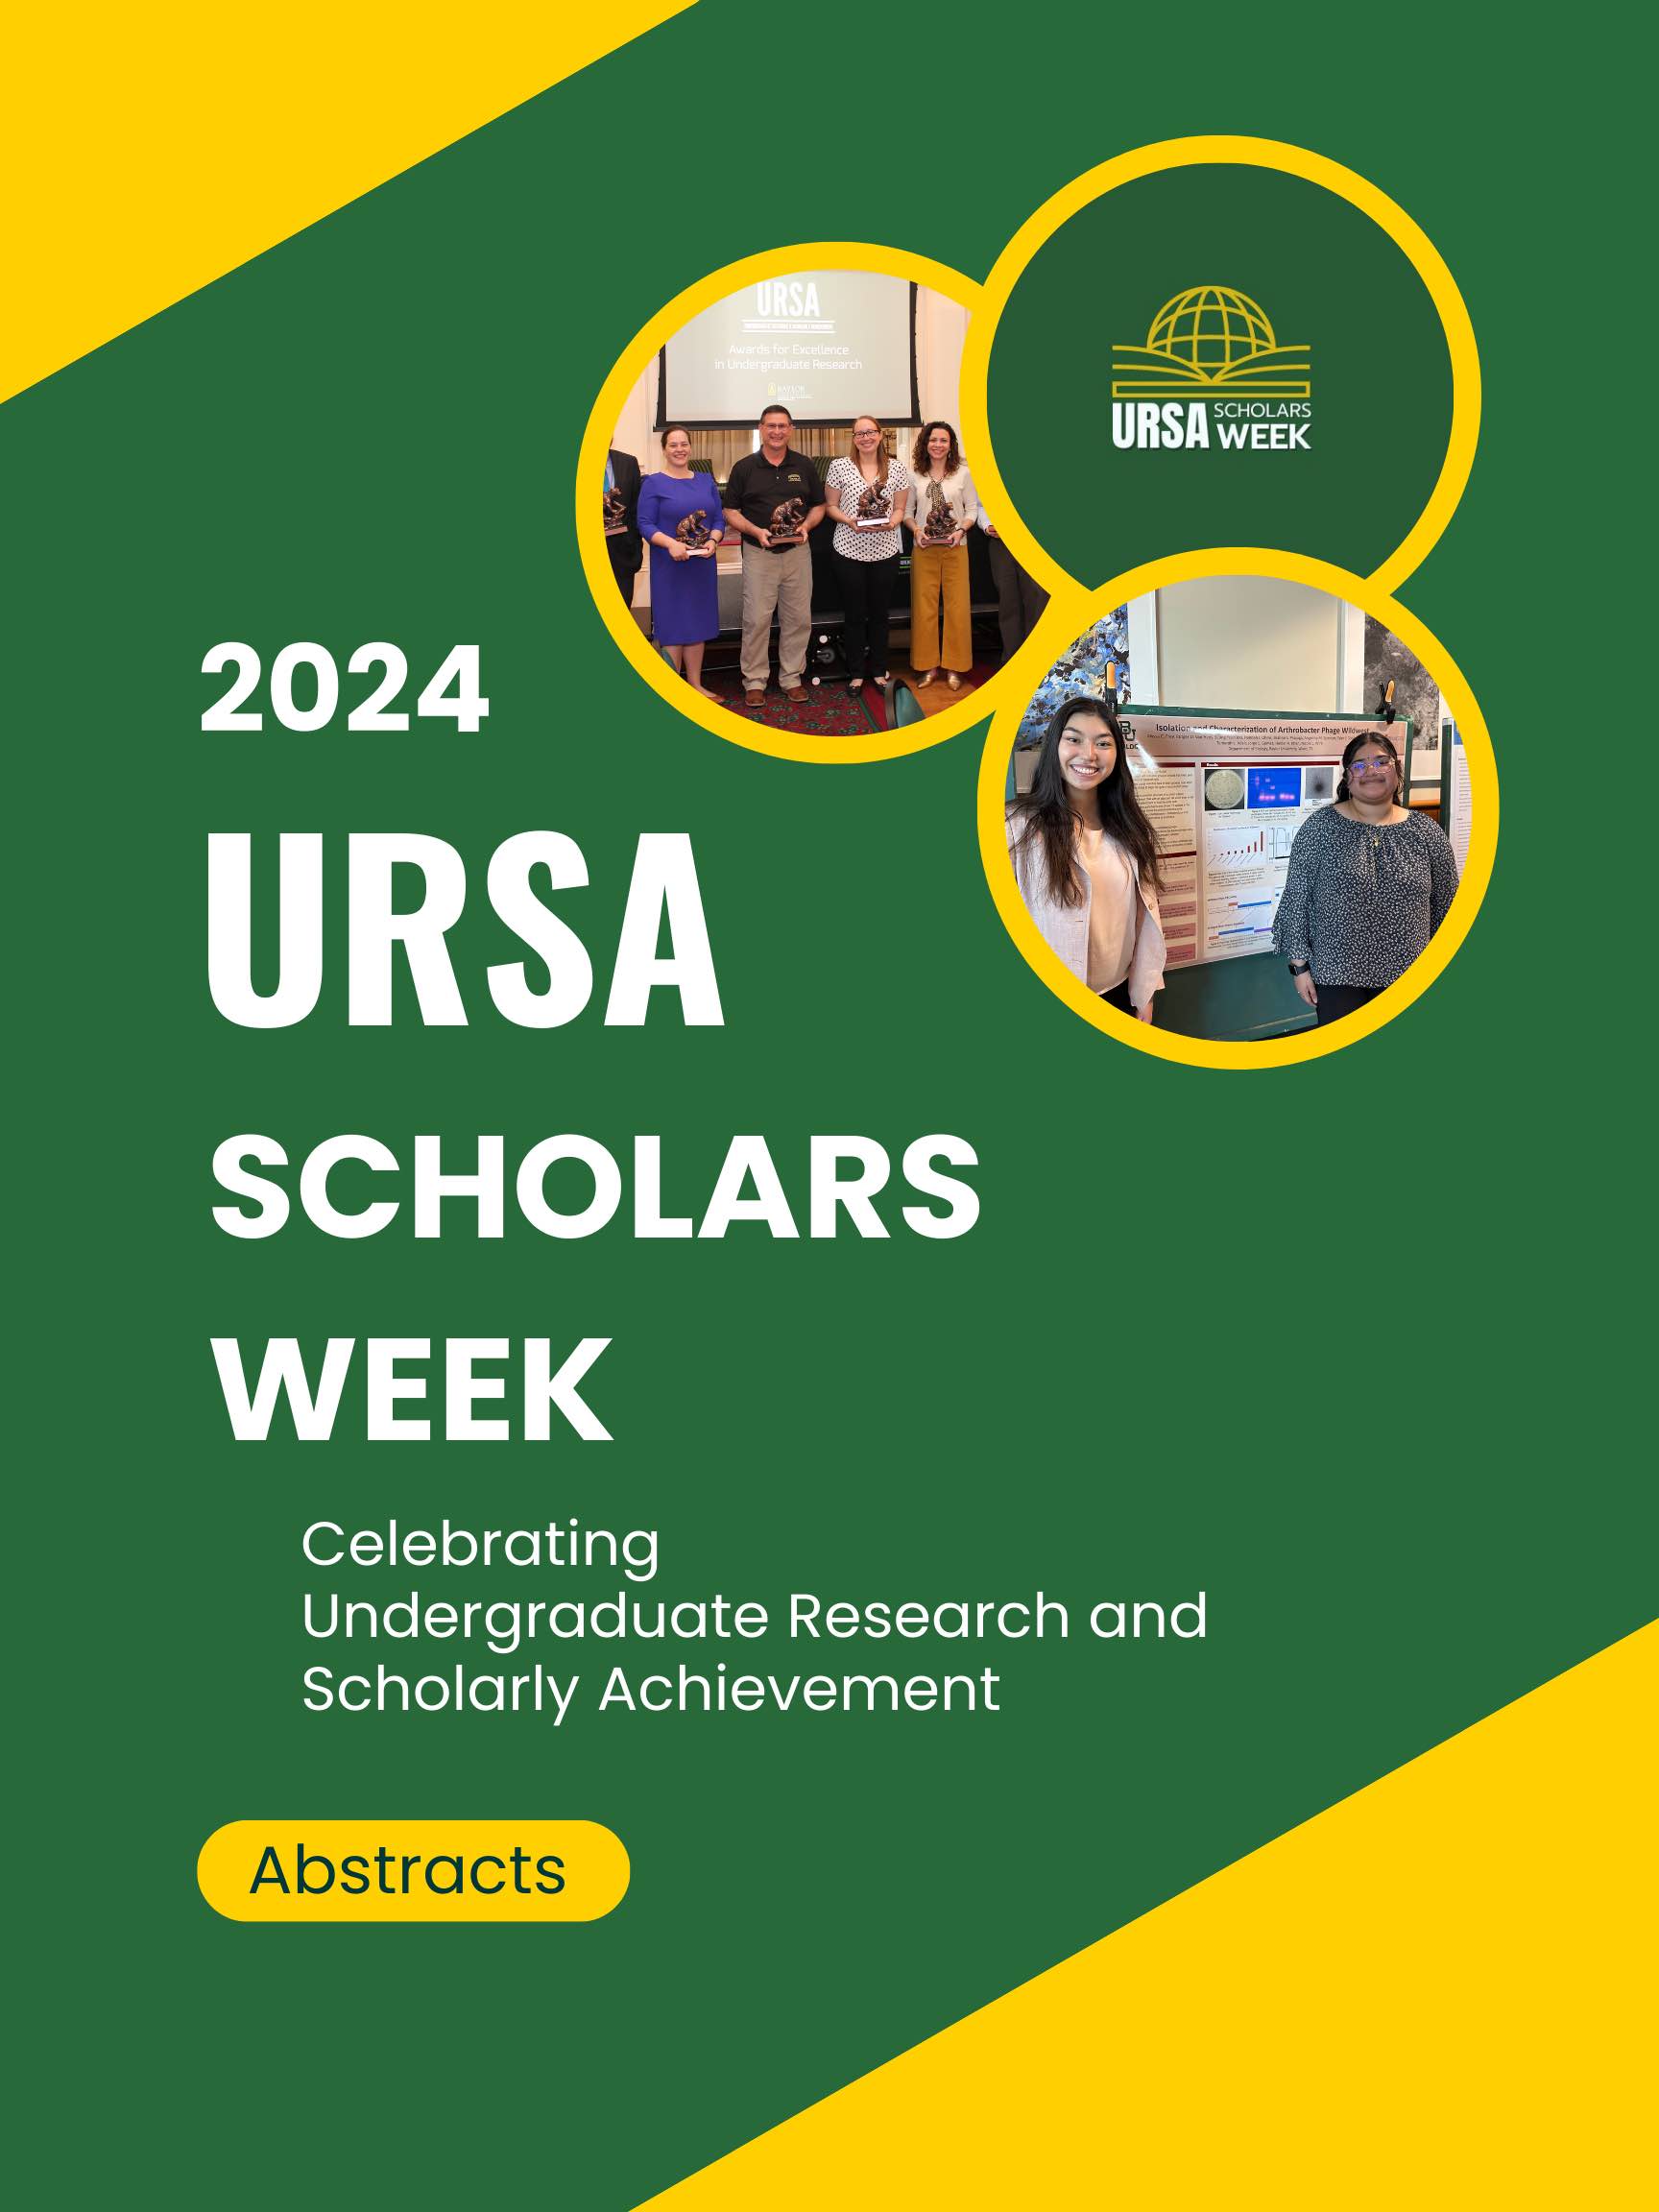 URSA Scholars Week